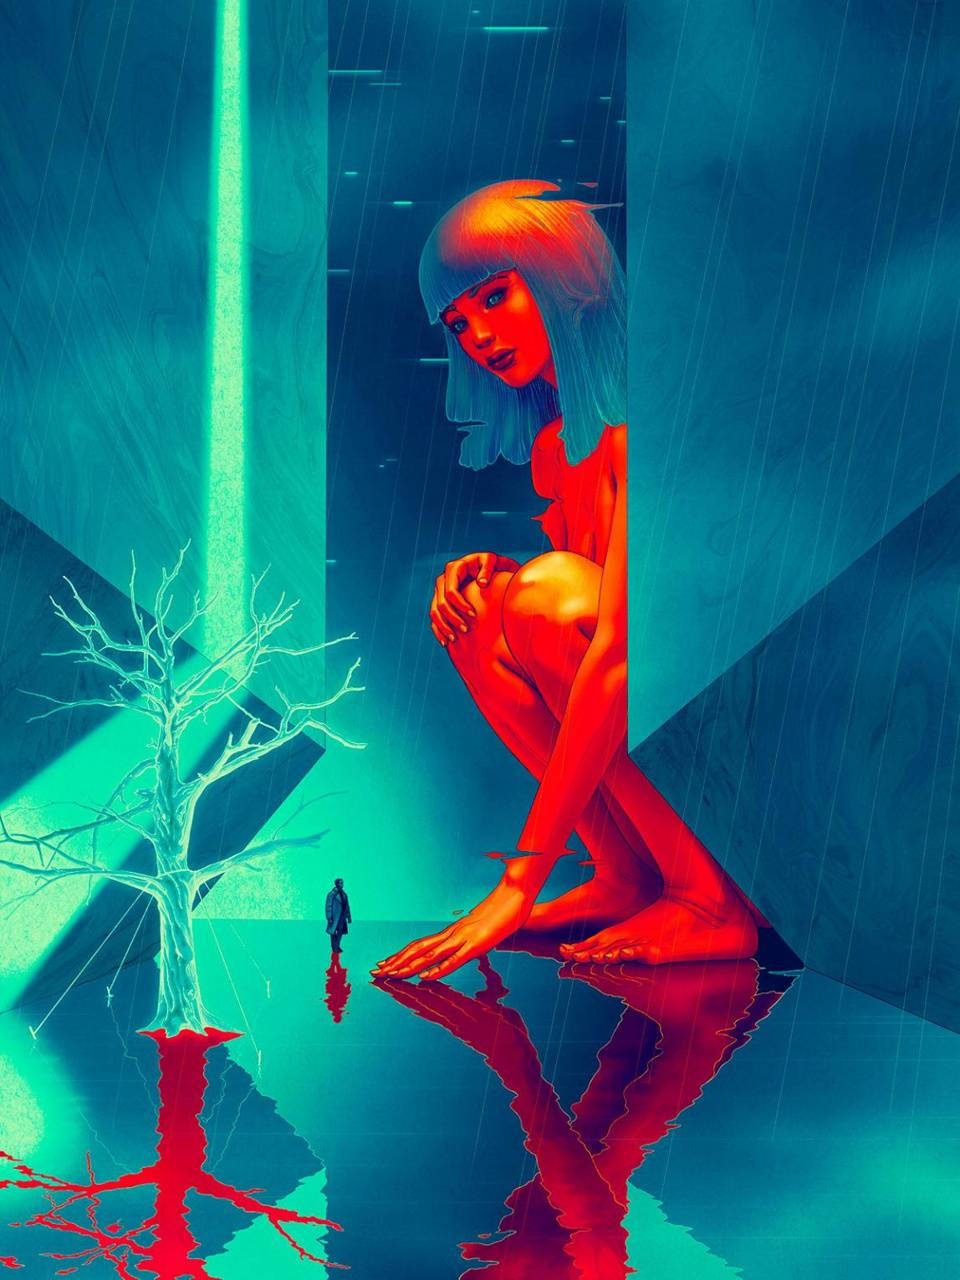 Blade Runner 2049 Vaporwave Background